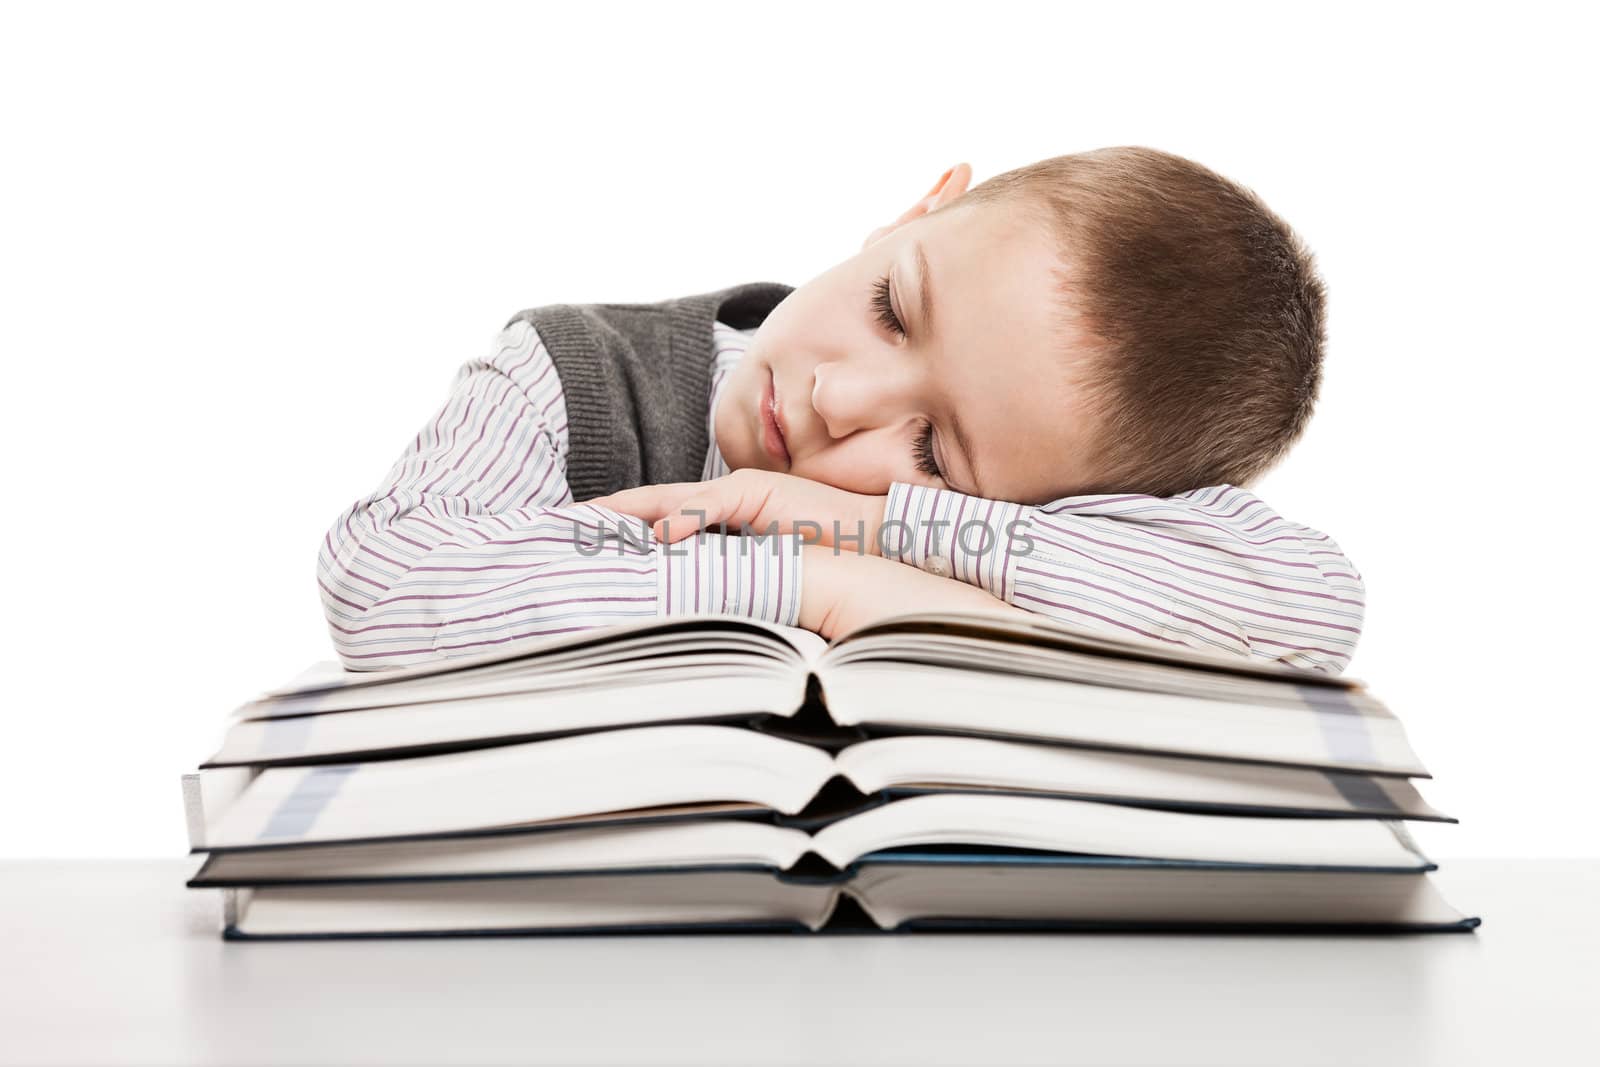 Tired child boy sleeping on education reading books at school desk